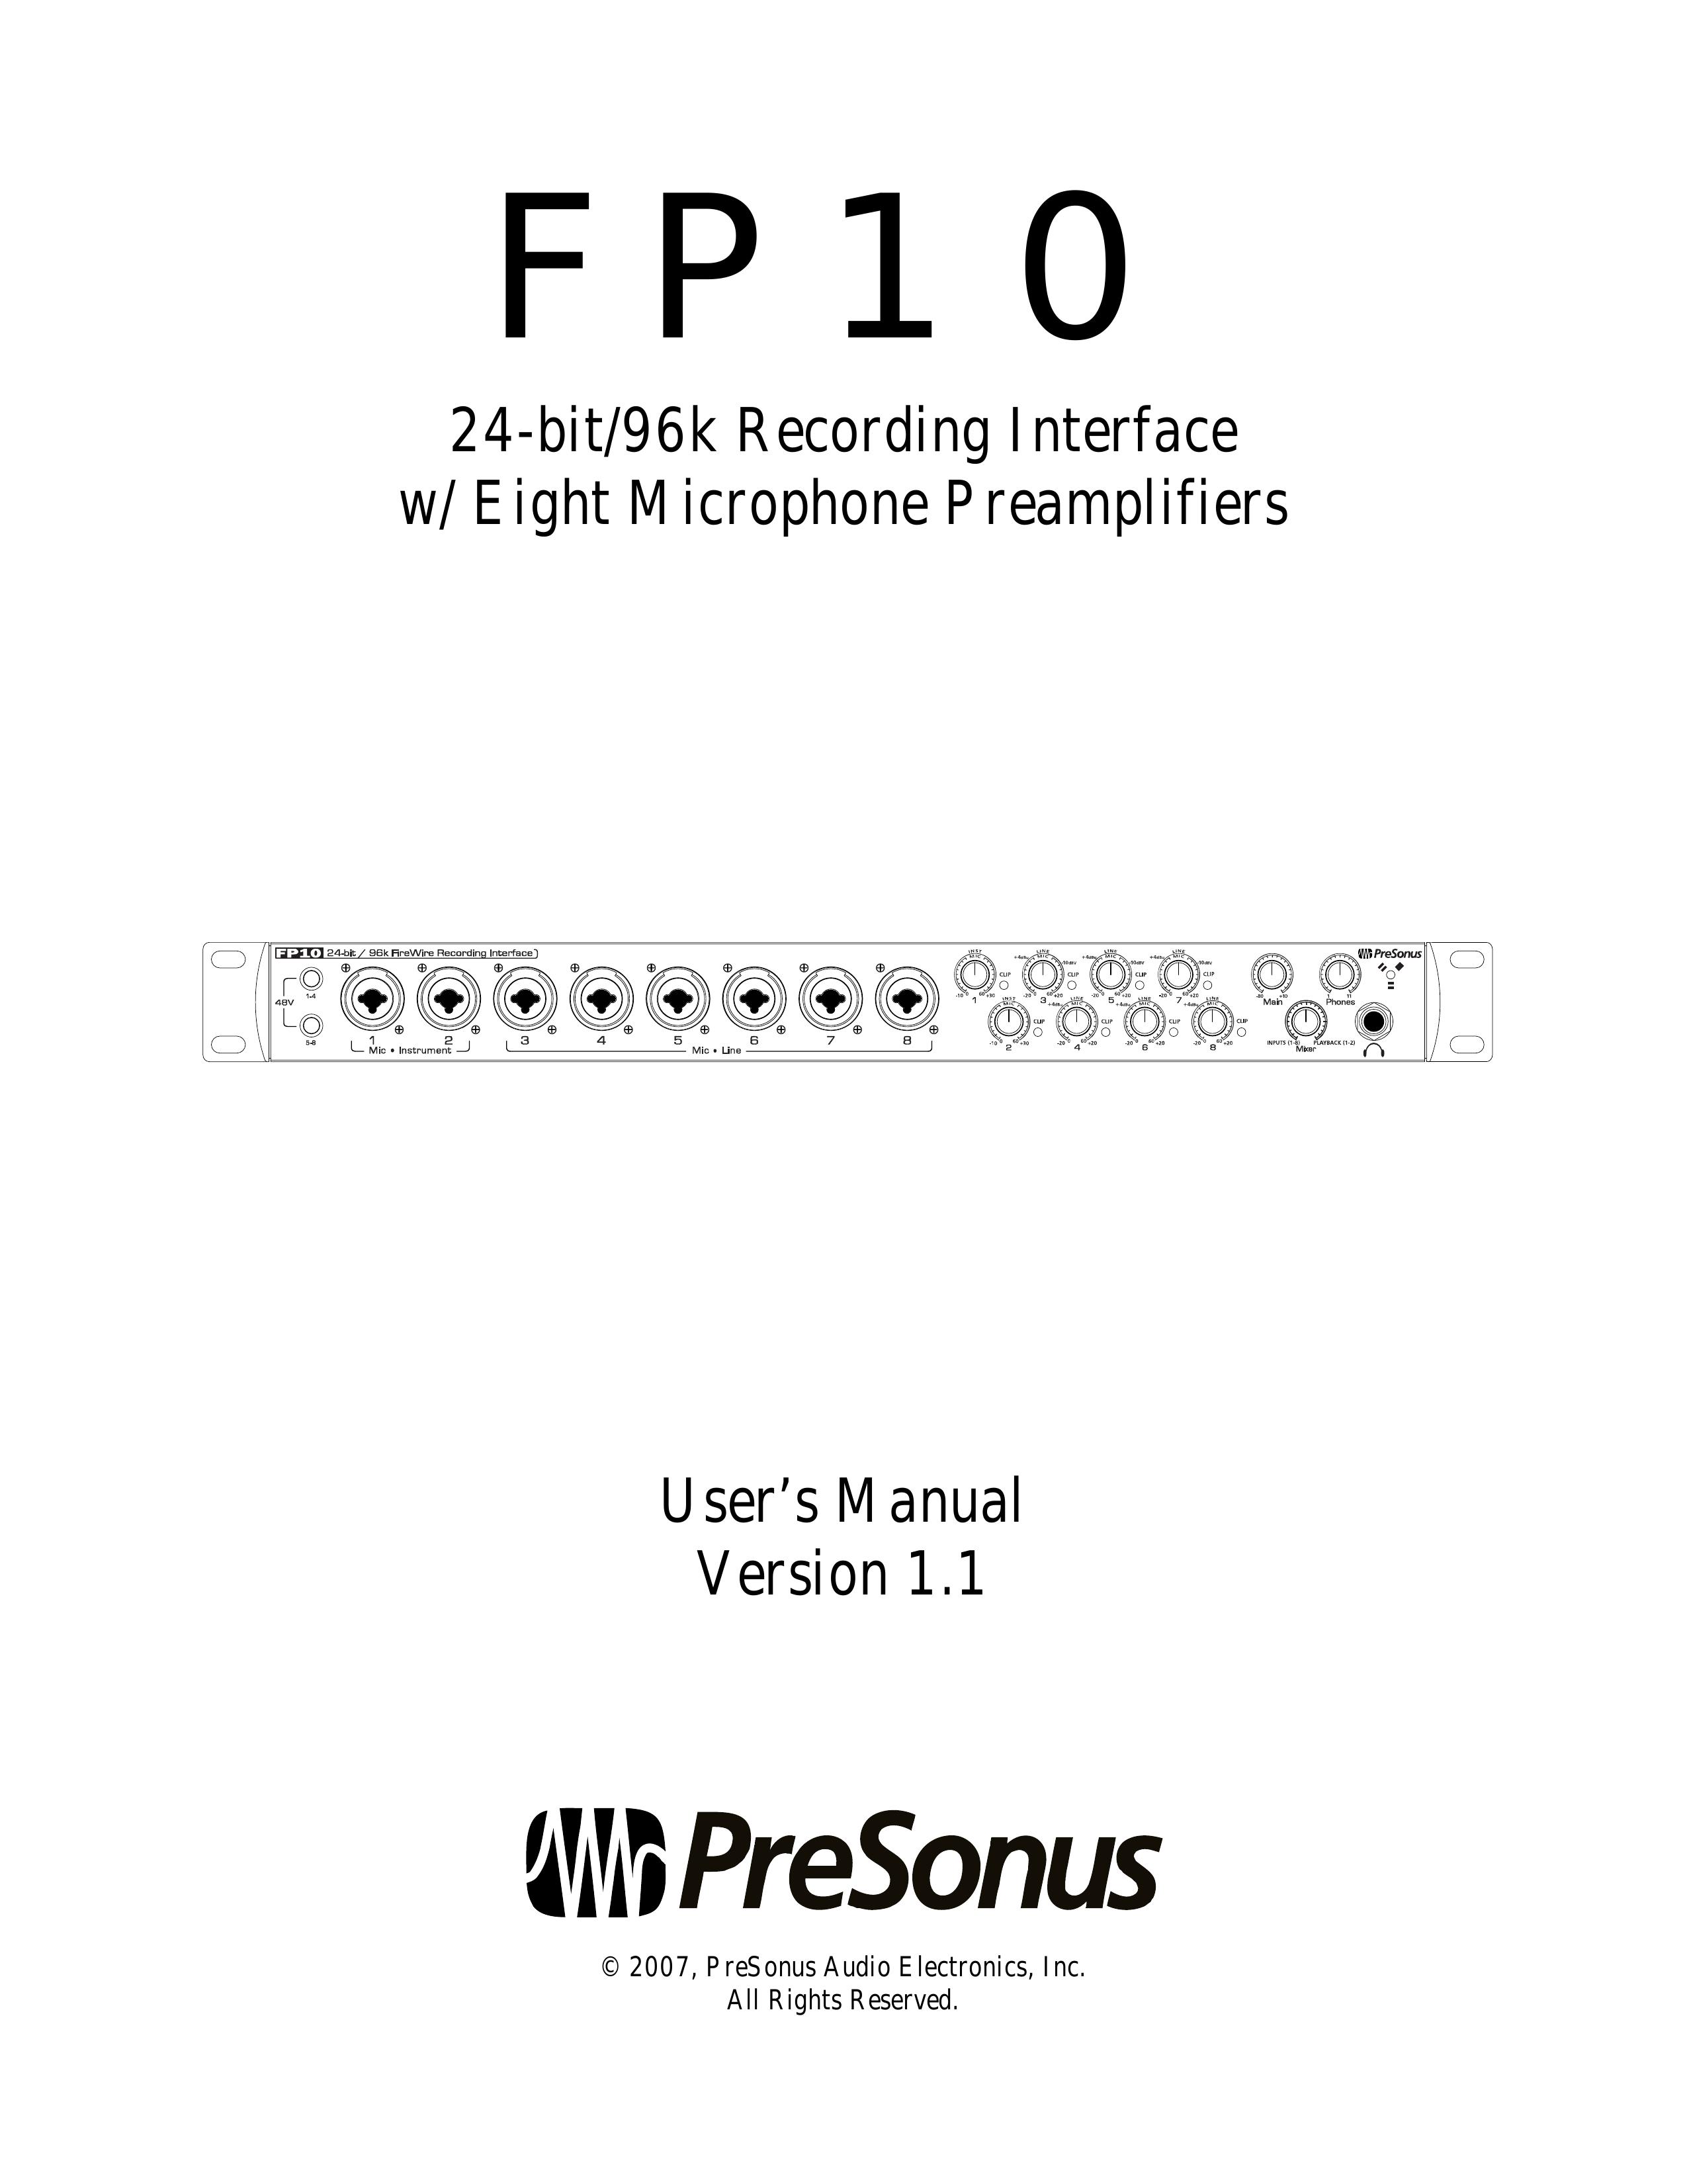 Presonus Audio electronic FP10 Recording Equipment User Manual